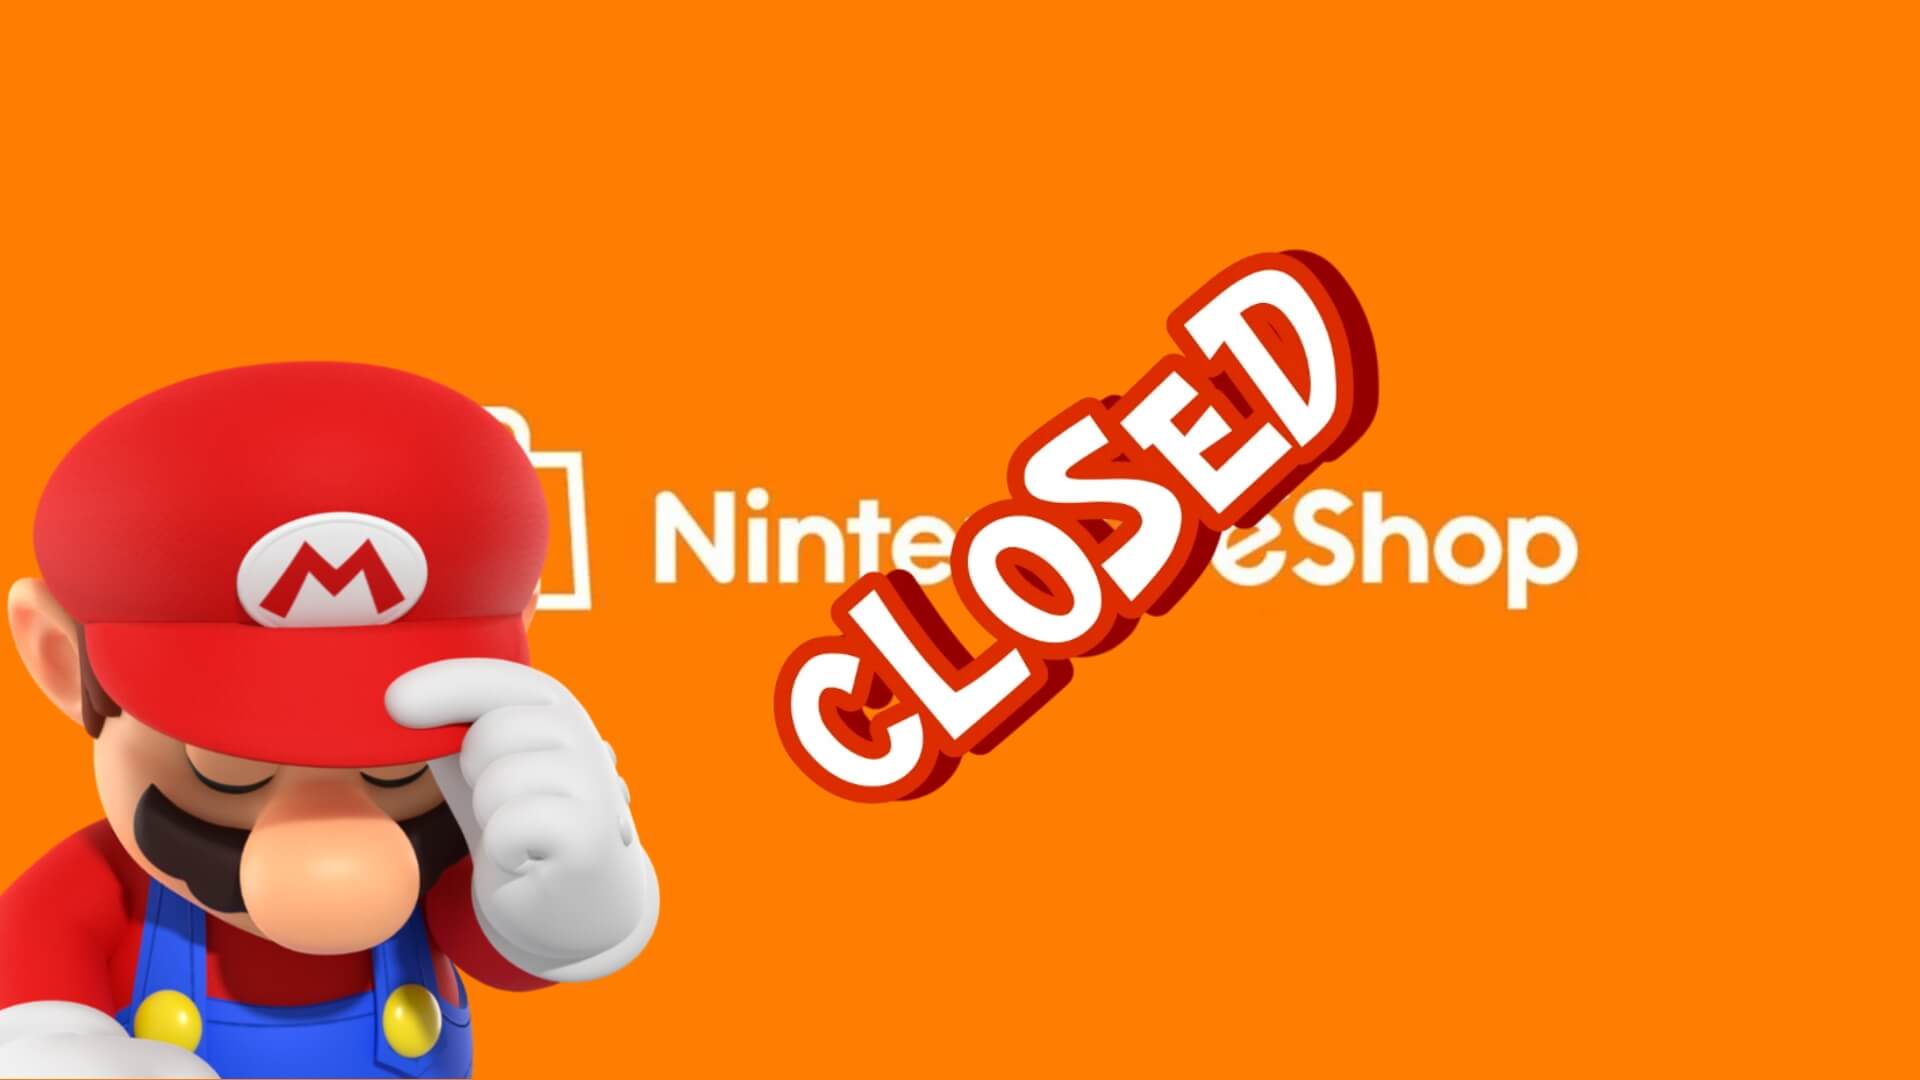 Nintendo's e-Shop closure was a devastating blow to digital games and preservation